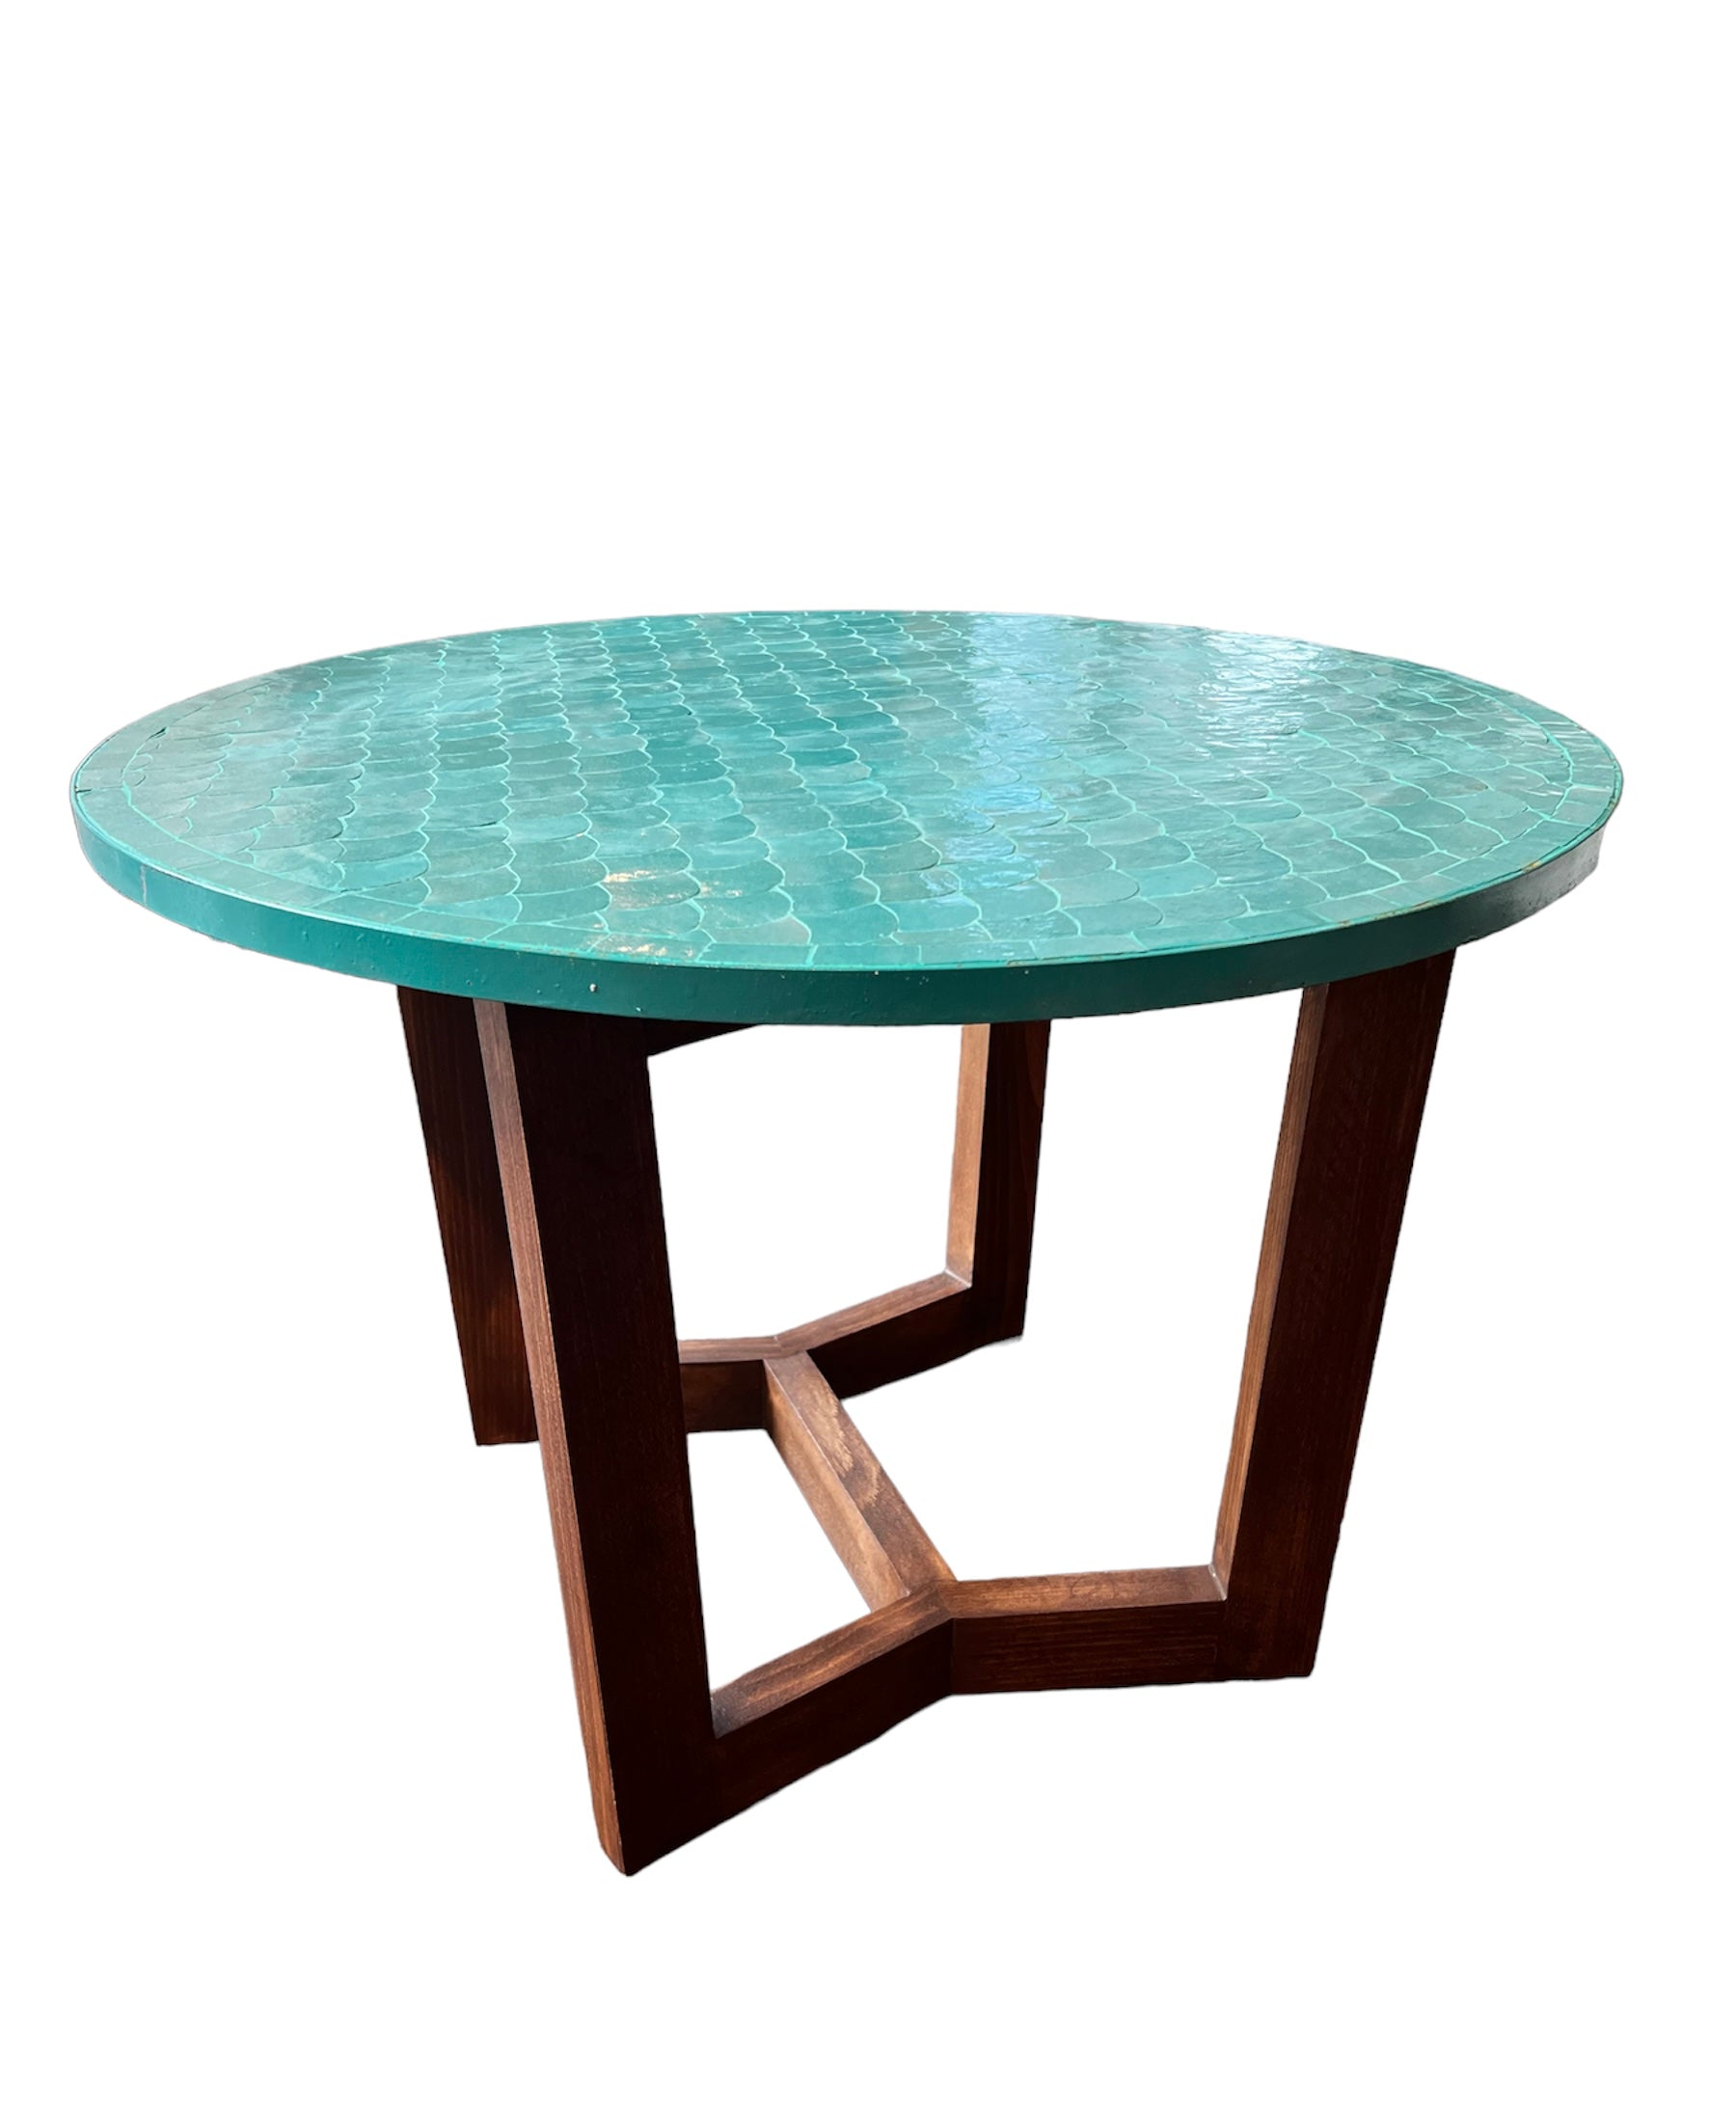 Rundt mosaik bord grøn/turkis mørk træstel